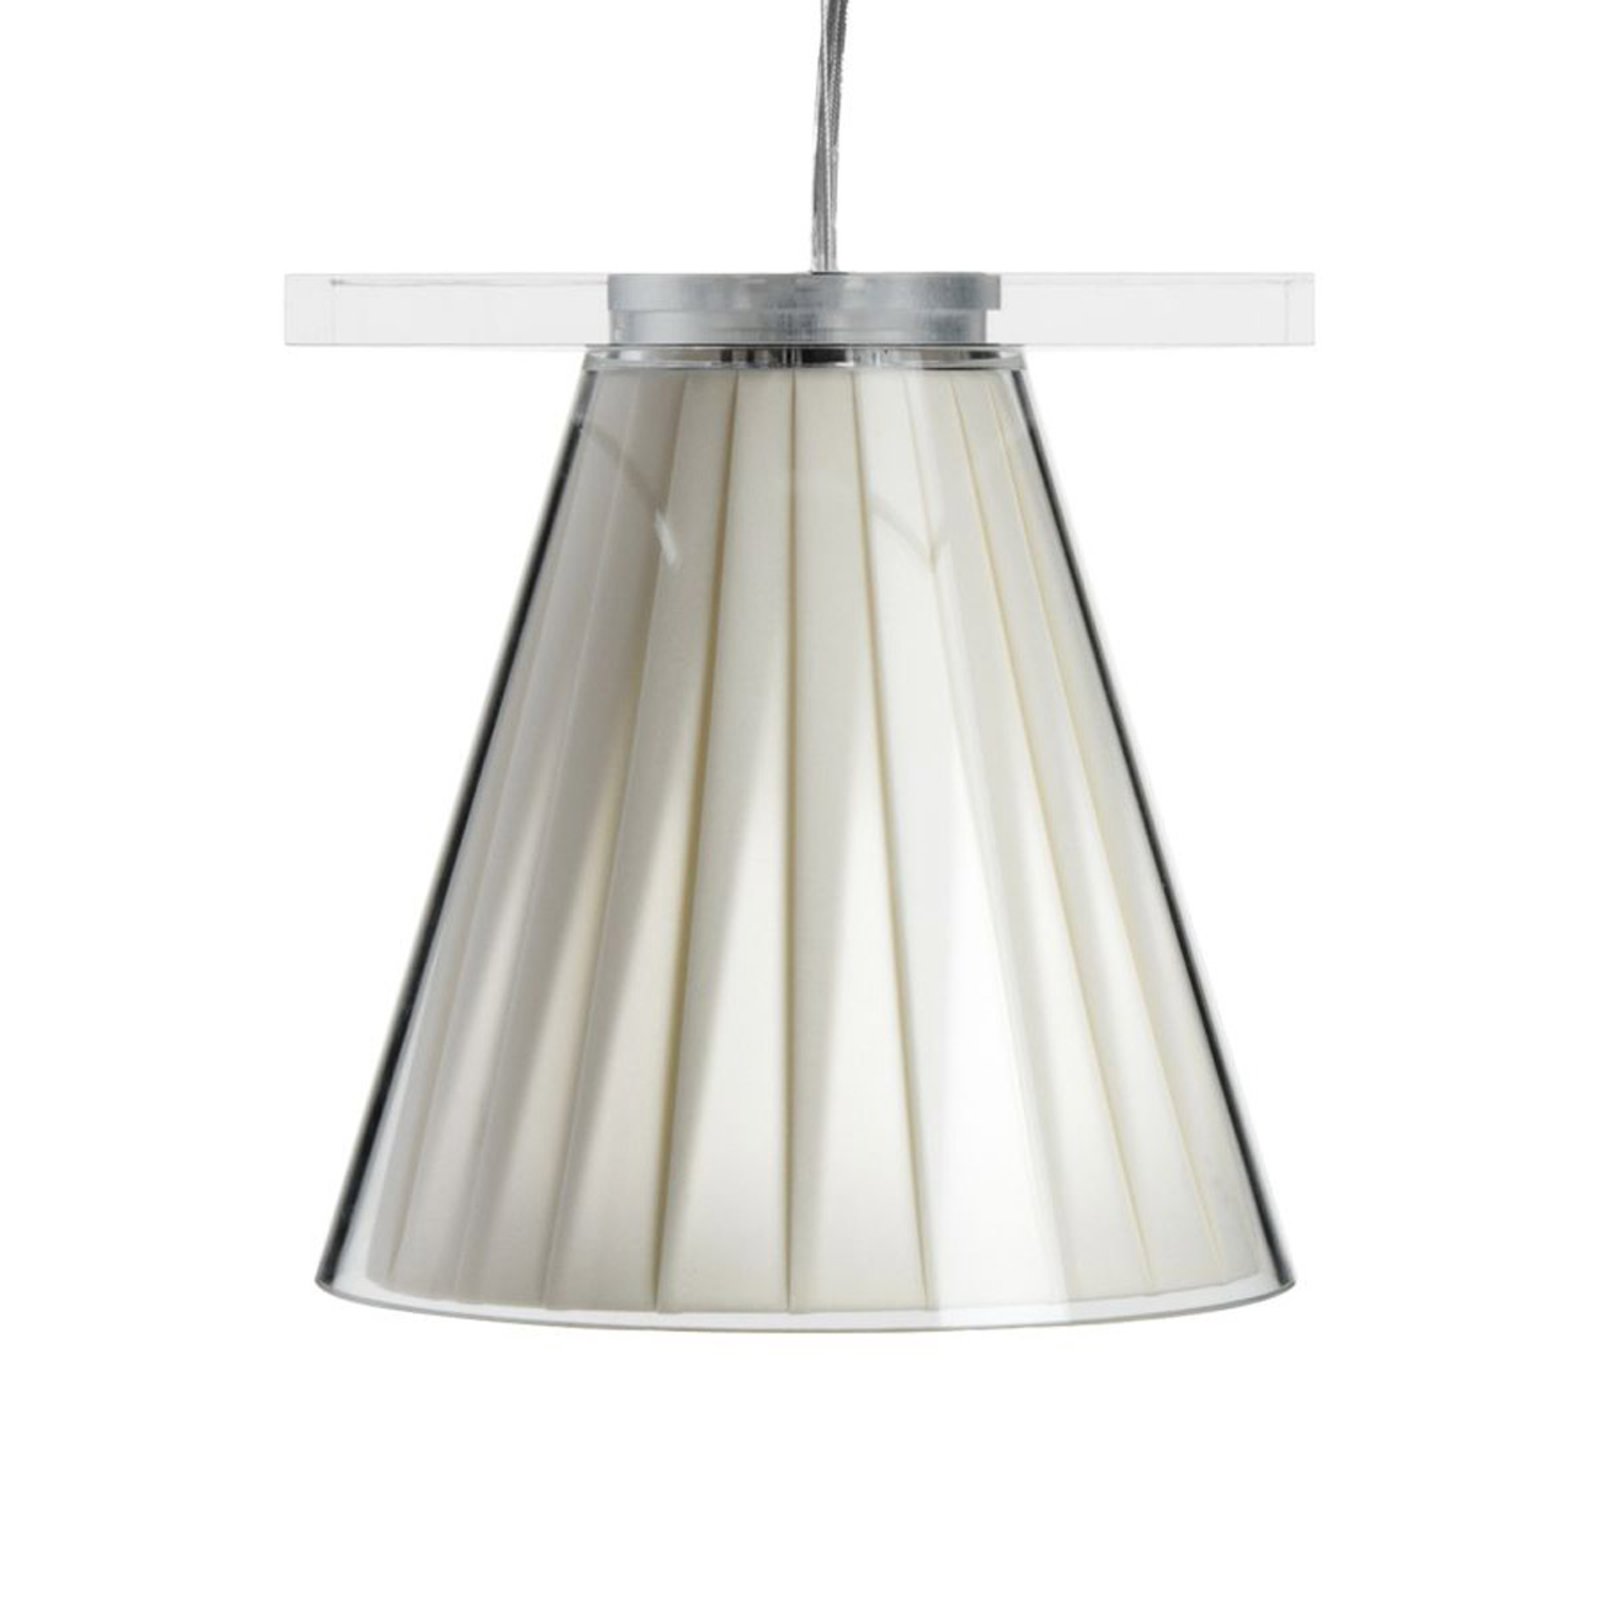 Kartell Light-Air LED hanging light, textile shade